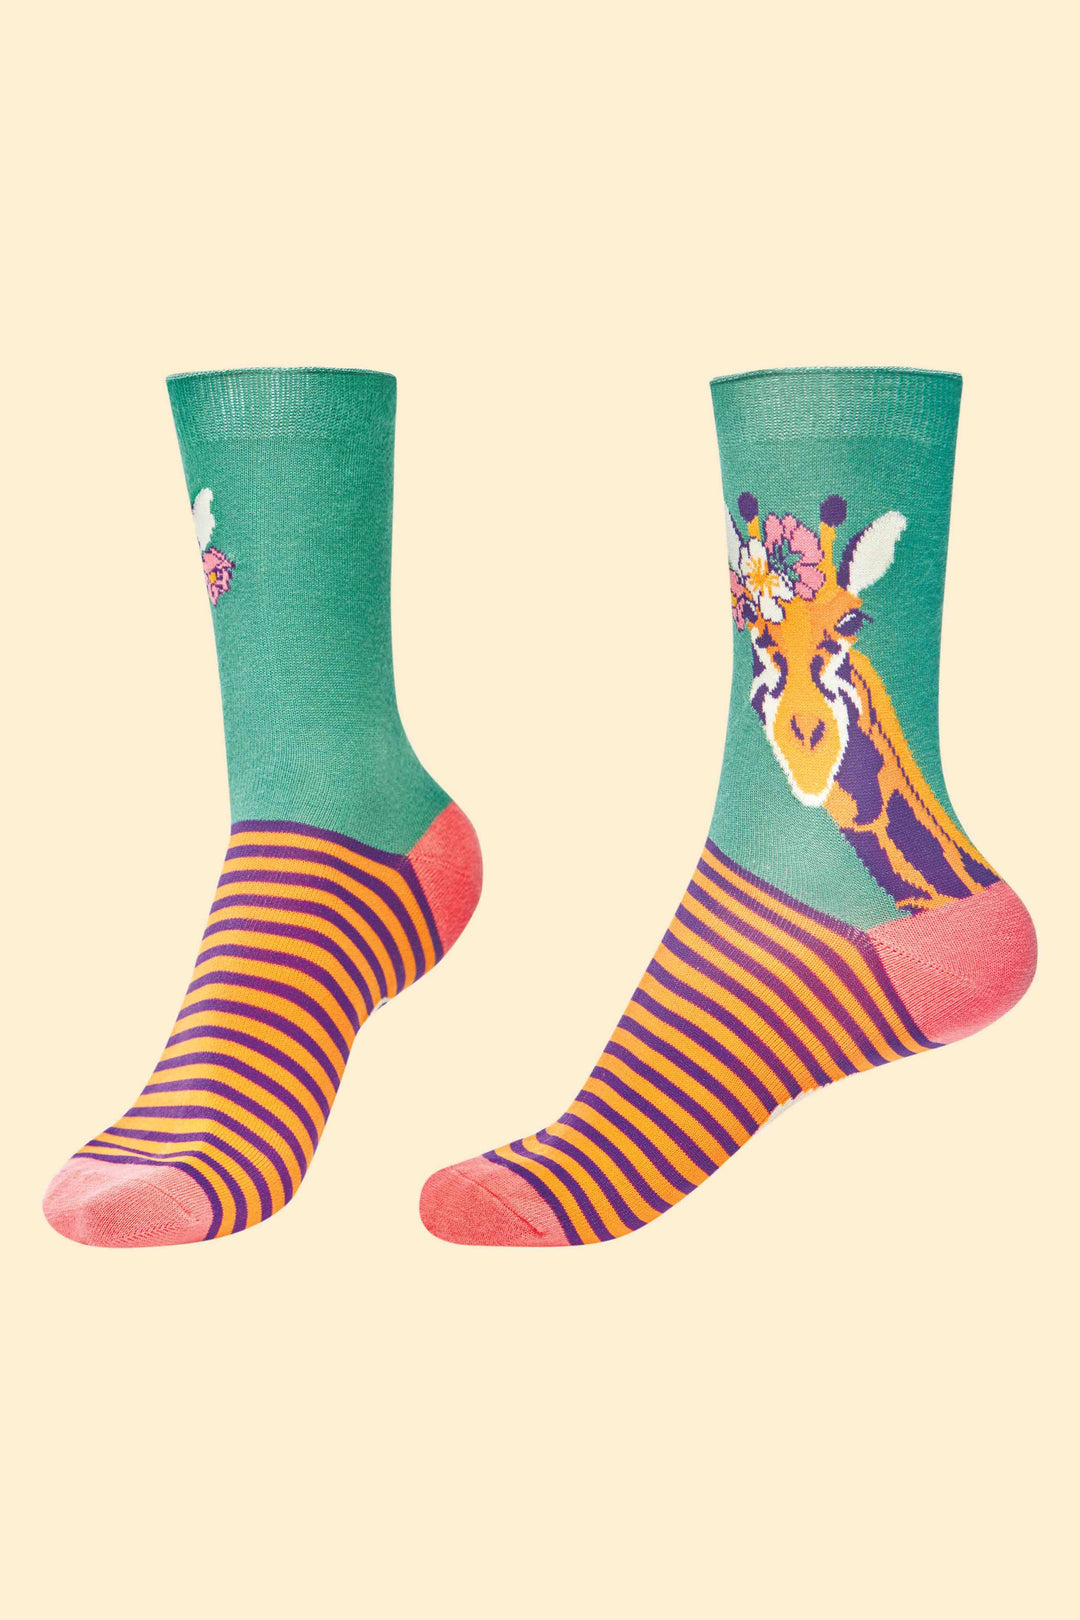 Powder Design inc - Fancy Giraffe Ankle Socks - Teal